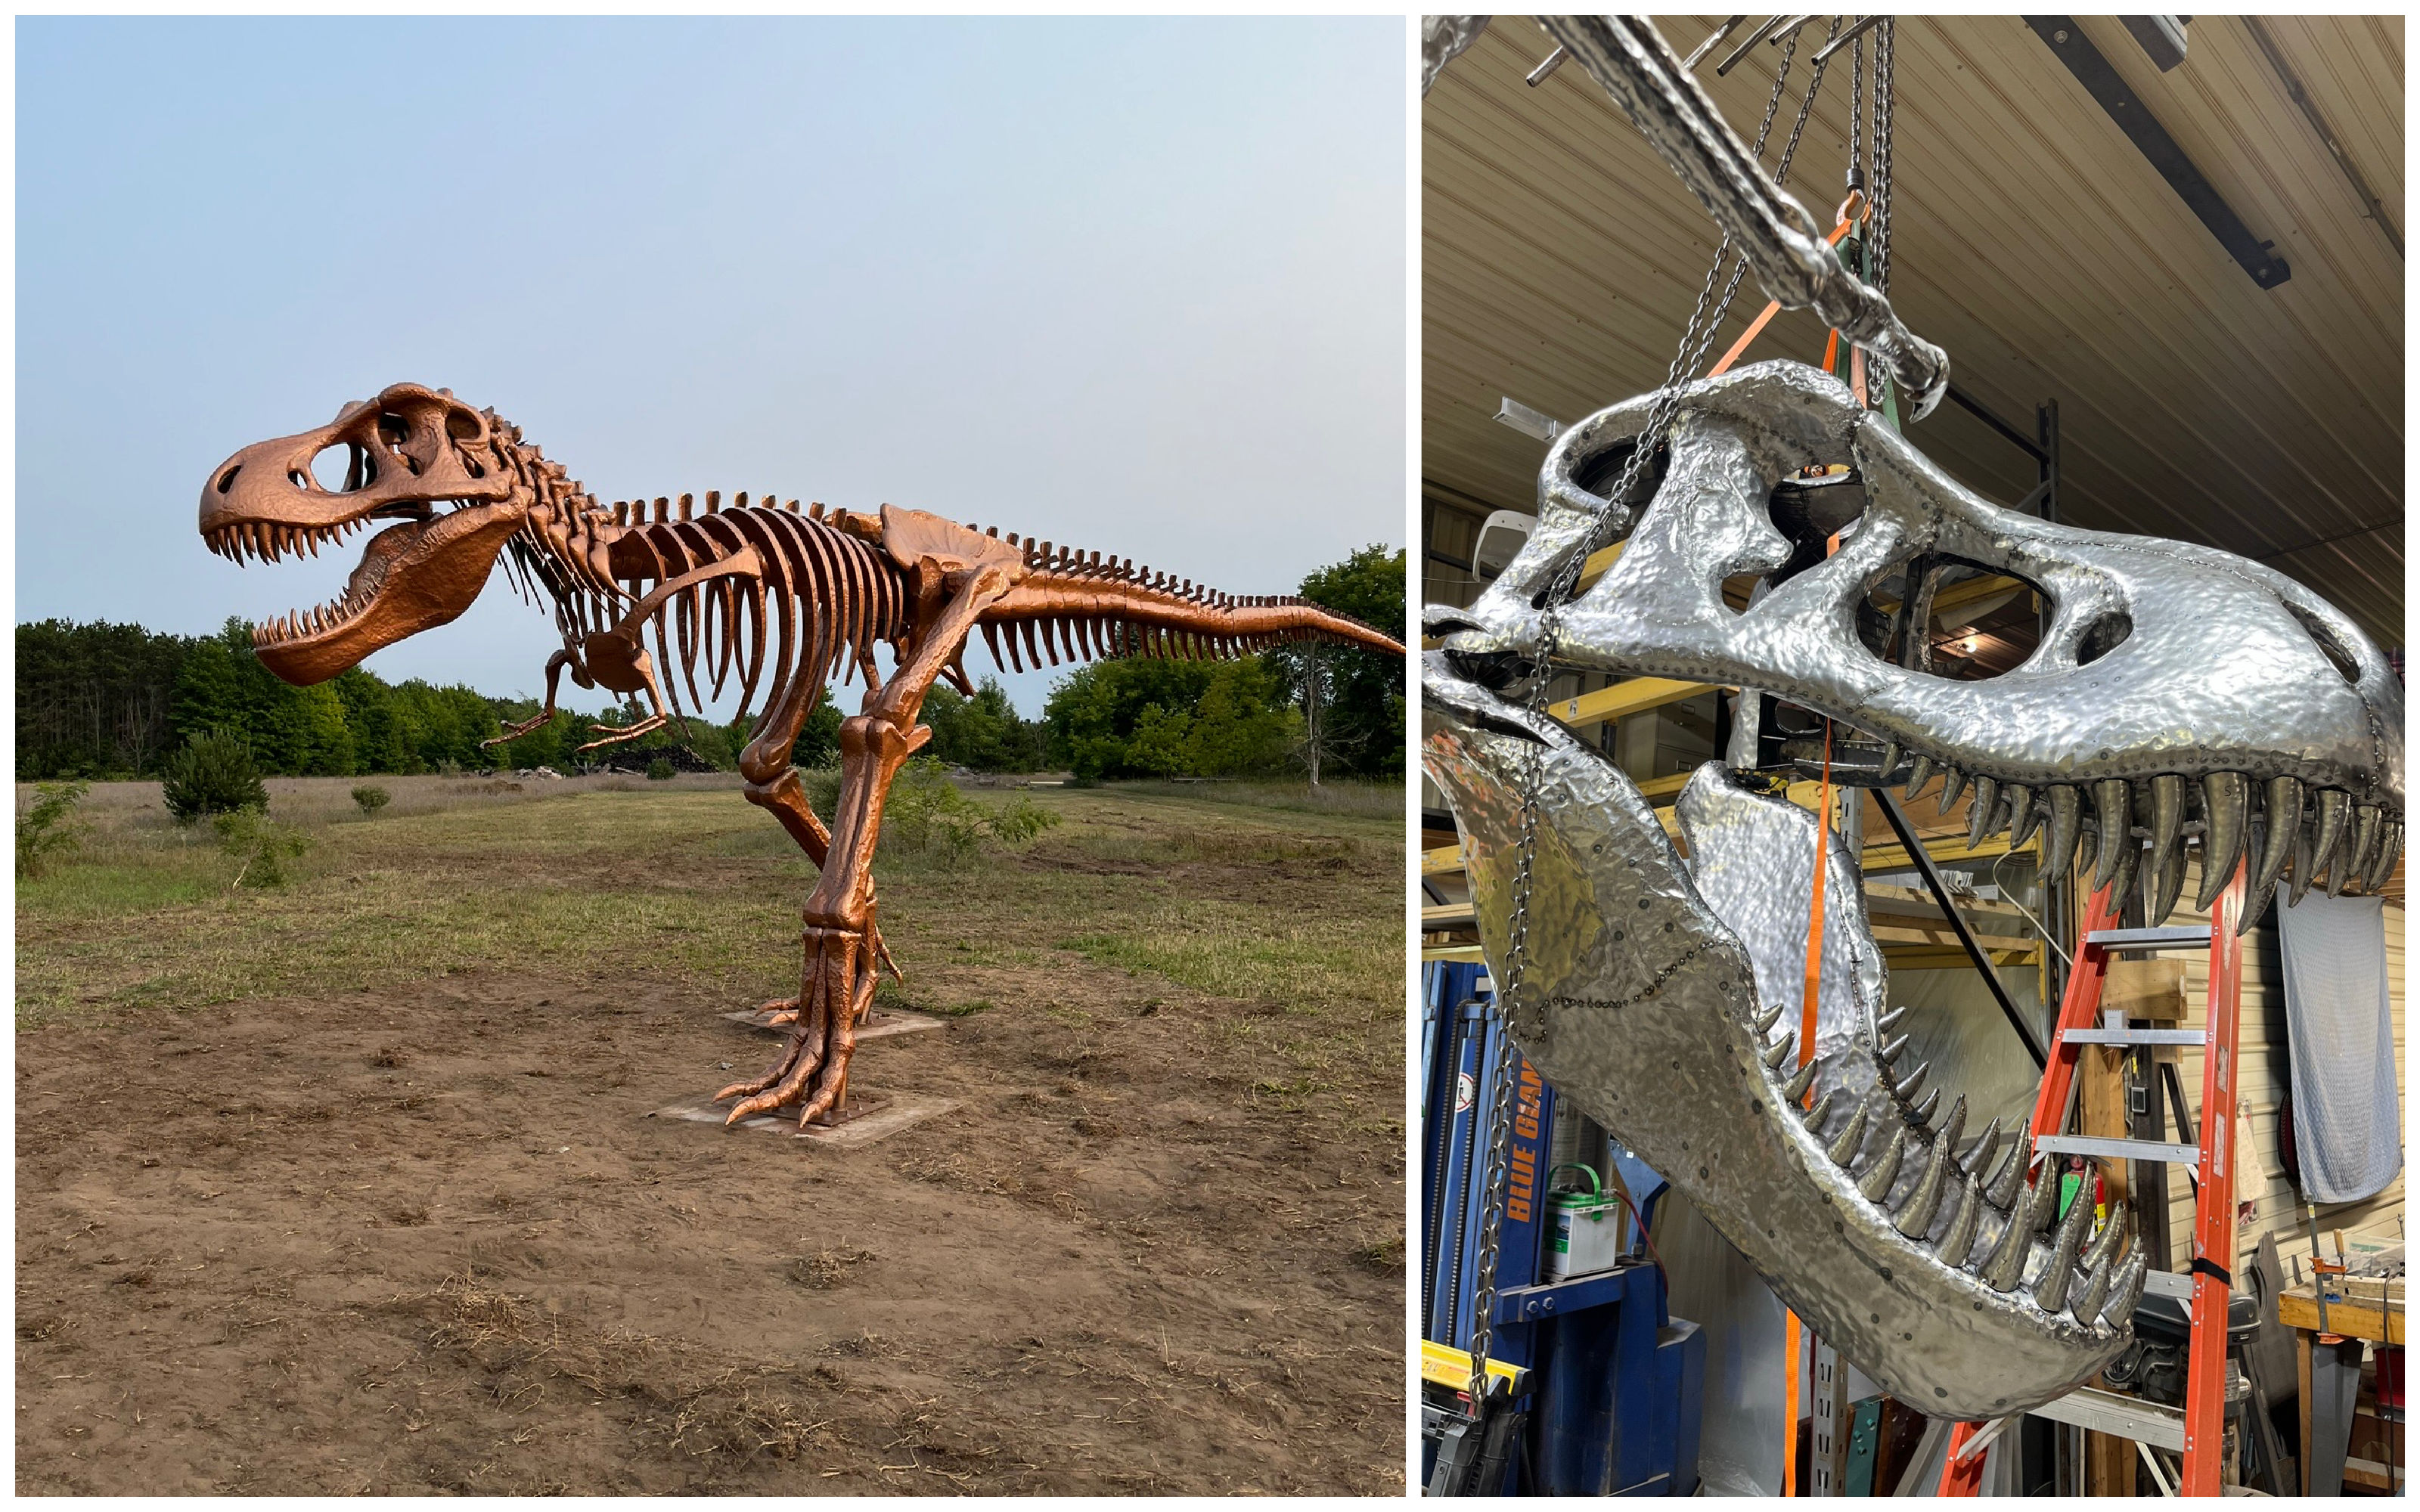 T. rex grew beefier than museum fossils suggest